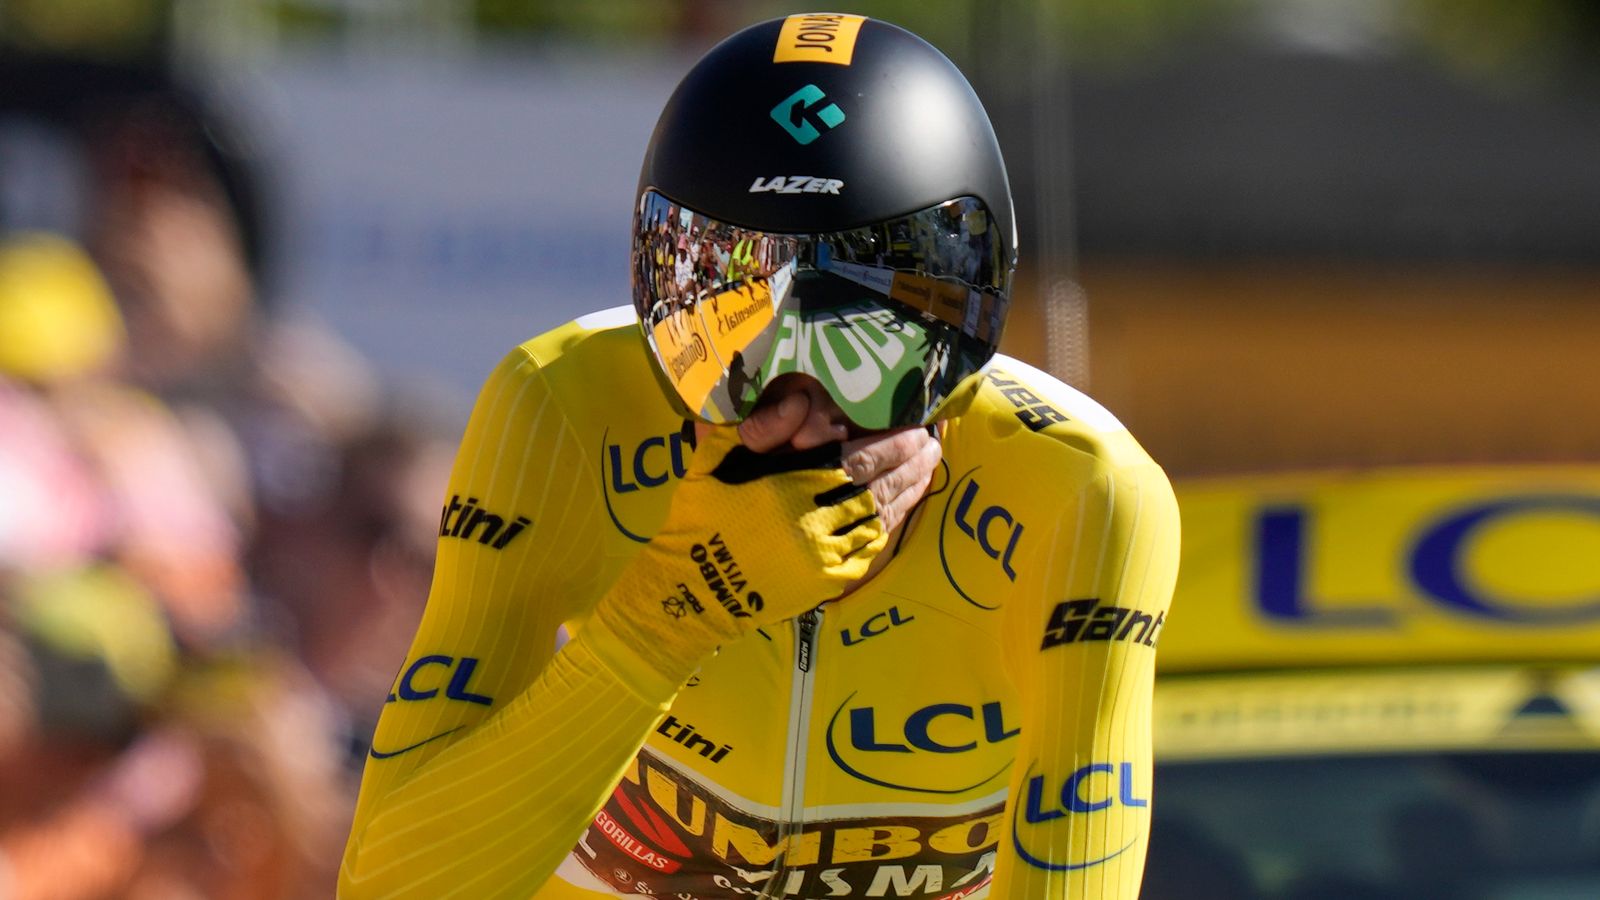 Tour de France: Jonas Vingegaard set to win Tour as Wout van Aert clinches time trial